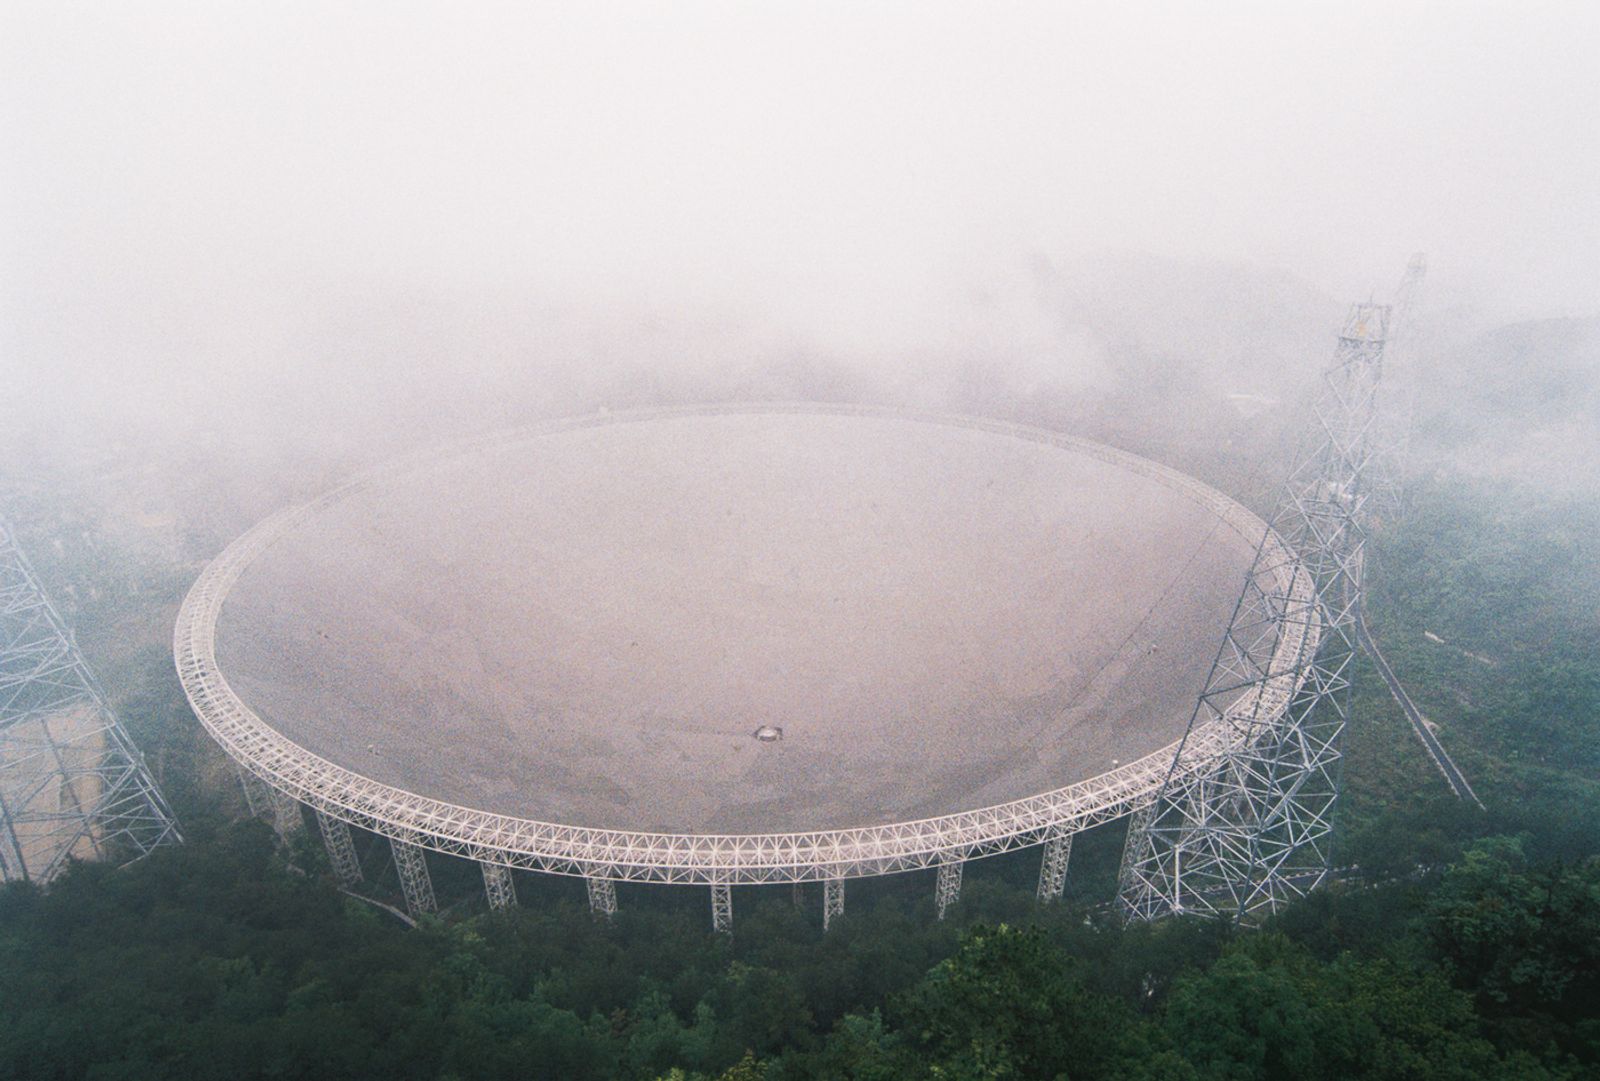 © Matjaz Tancic - The Five-hundred-meter Aperture Spherical radio Telescope in Guizhou, China.